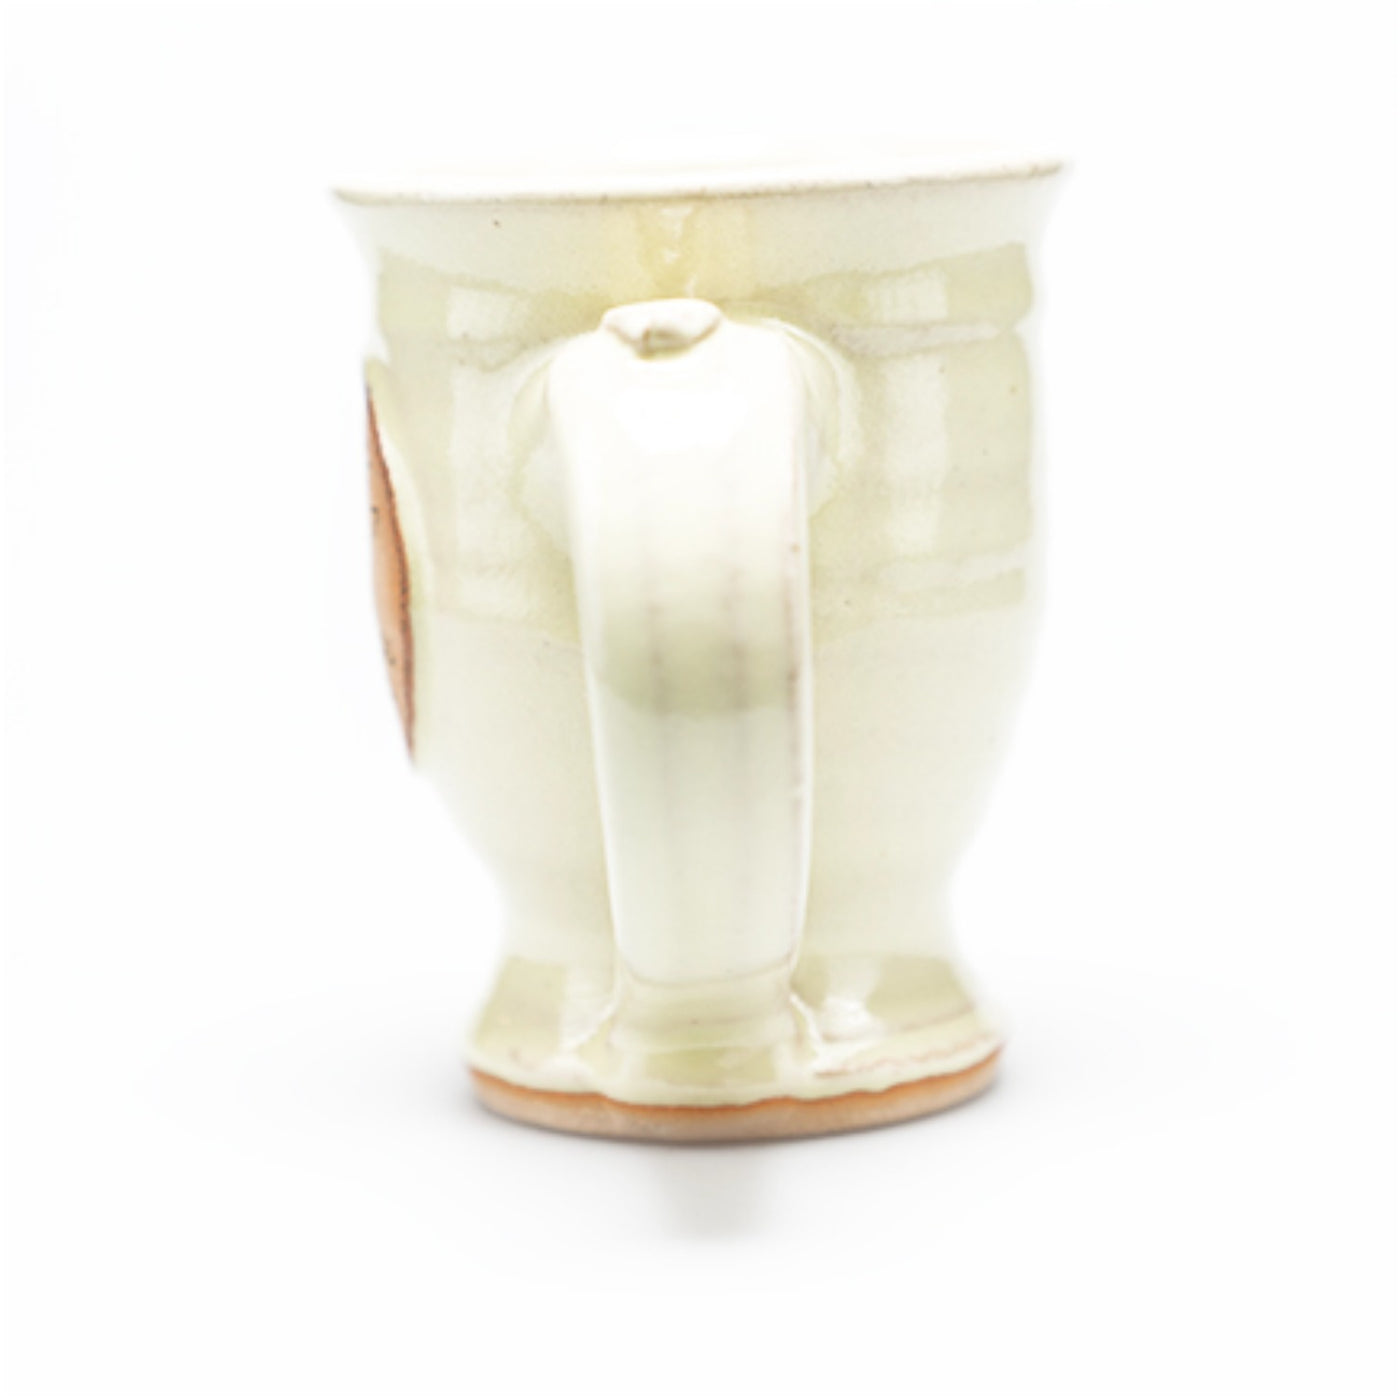 Mugs/Cups - Daffodil Mug